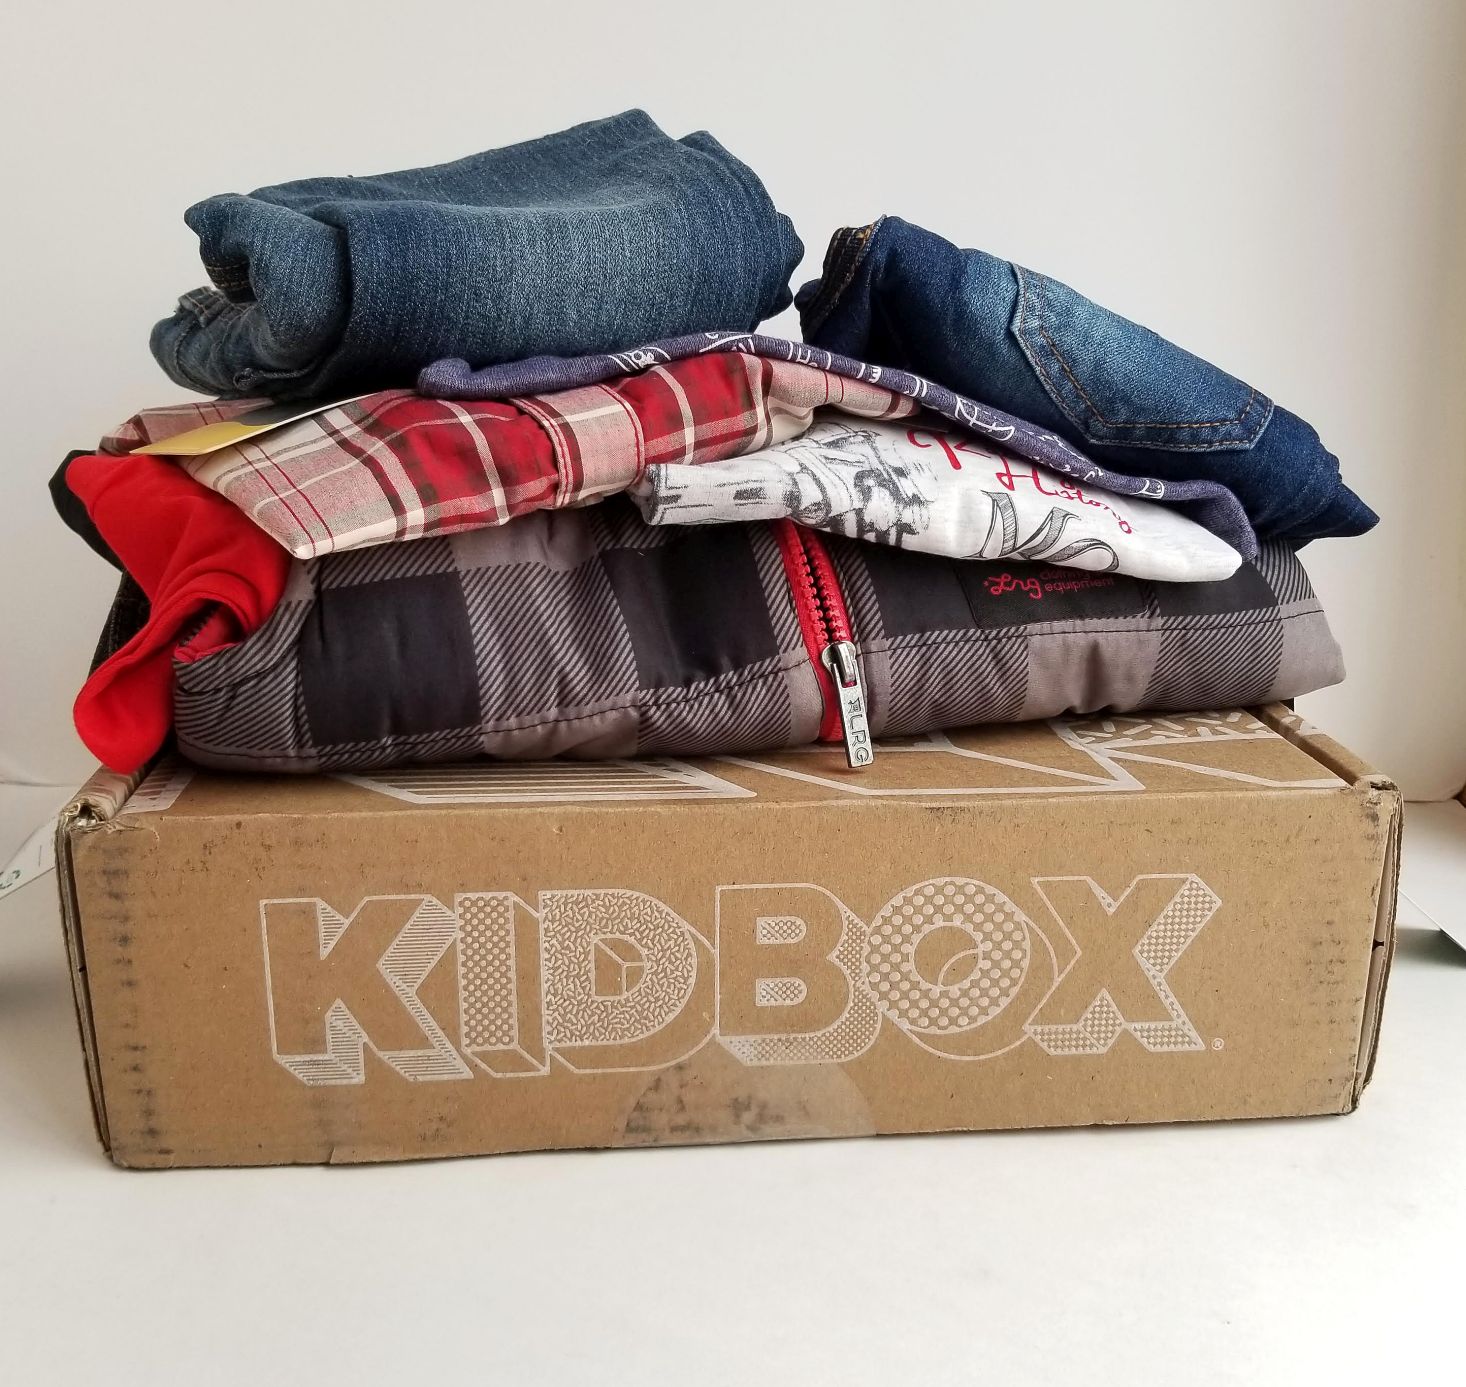 Kidbox Boys Clothing Subscription Review + Coupon – Fall 2018